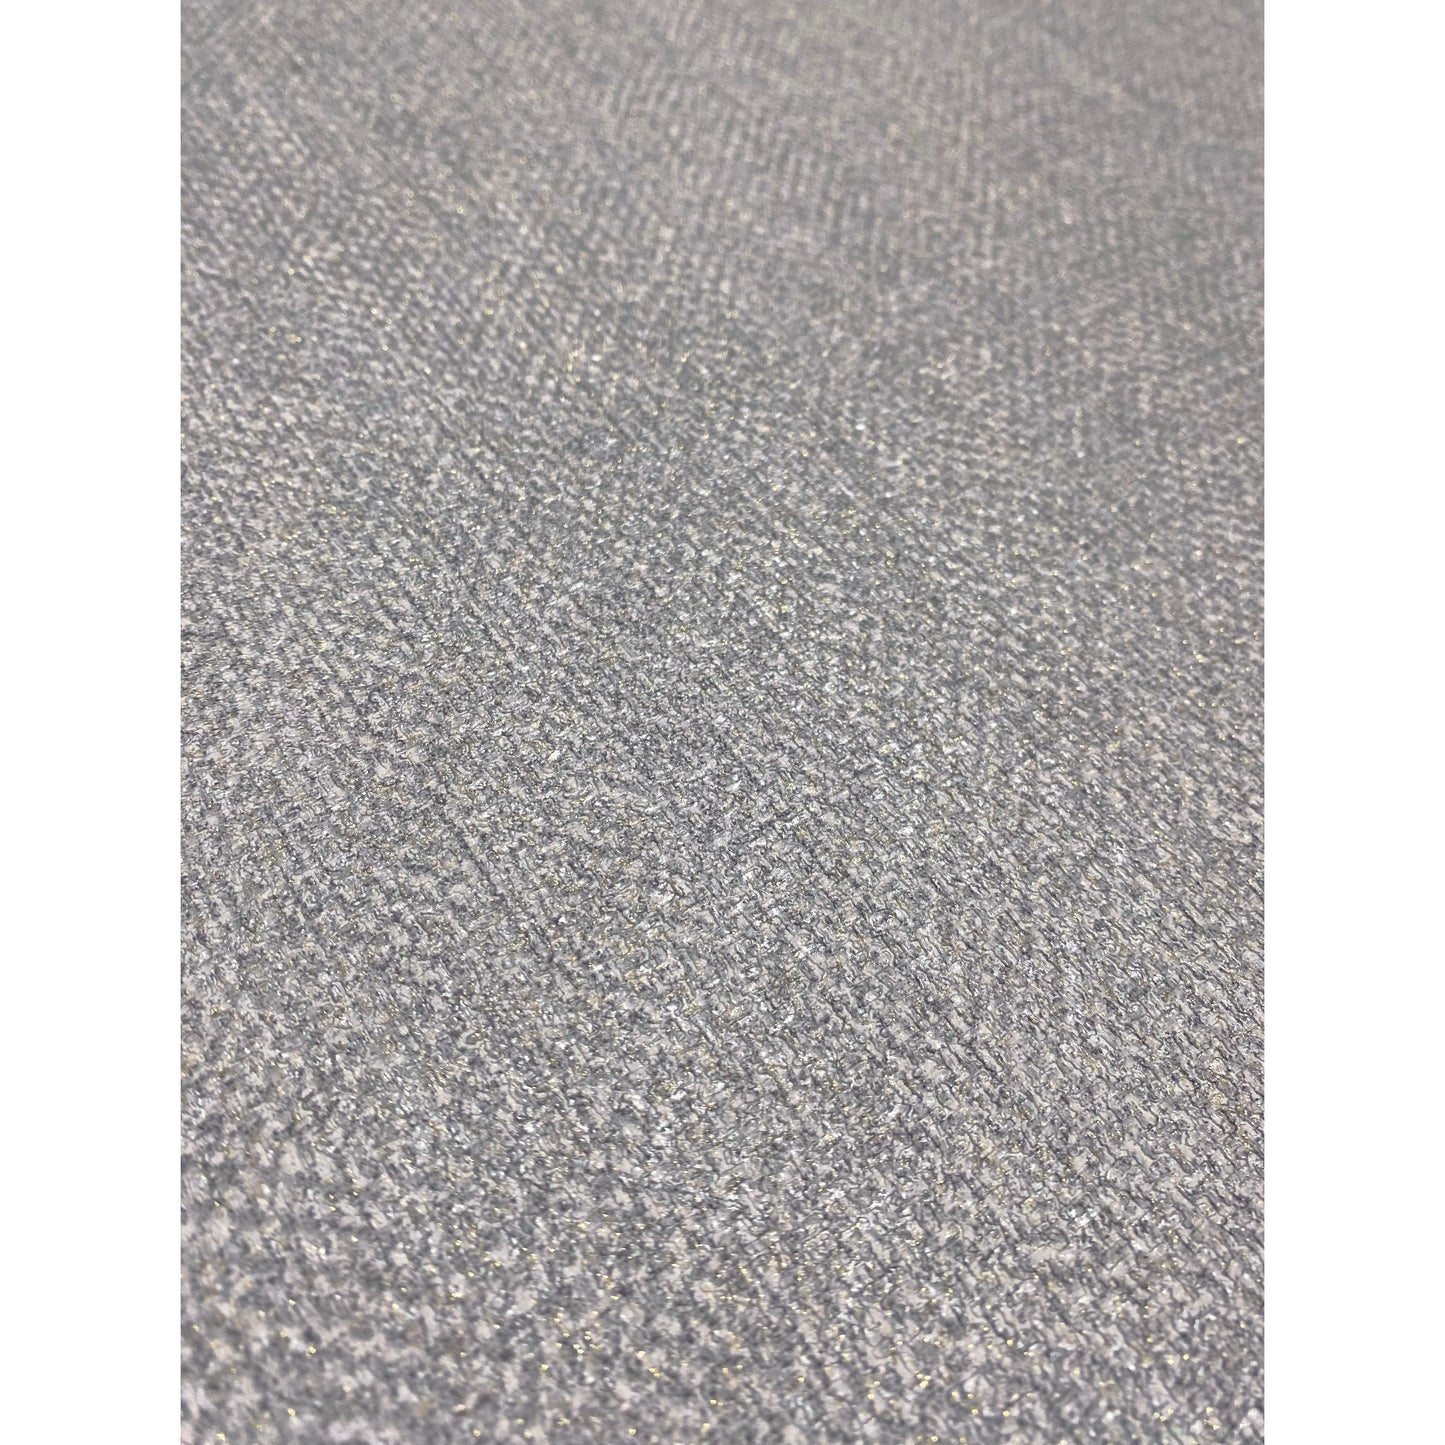 Muriva Venezia Texture Grey Wallpaper (M67319)